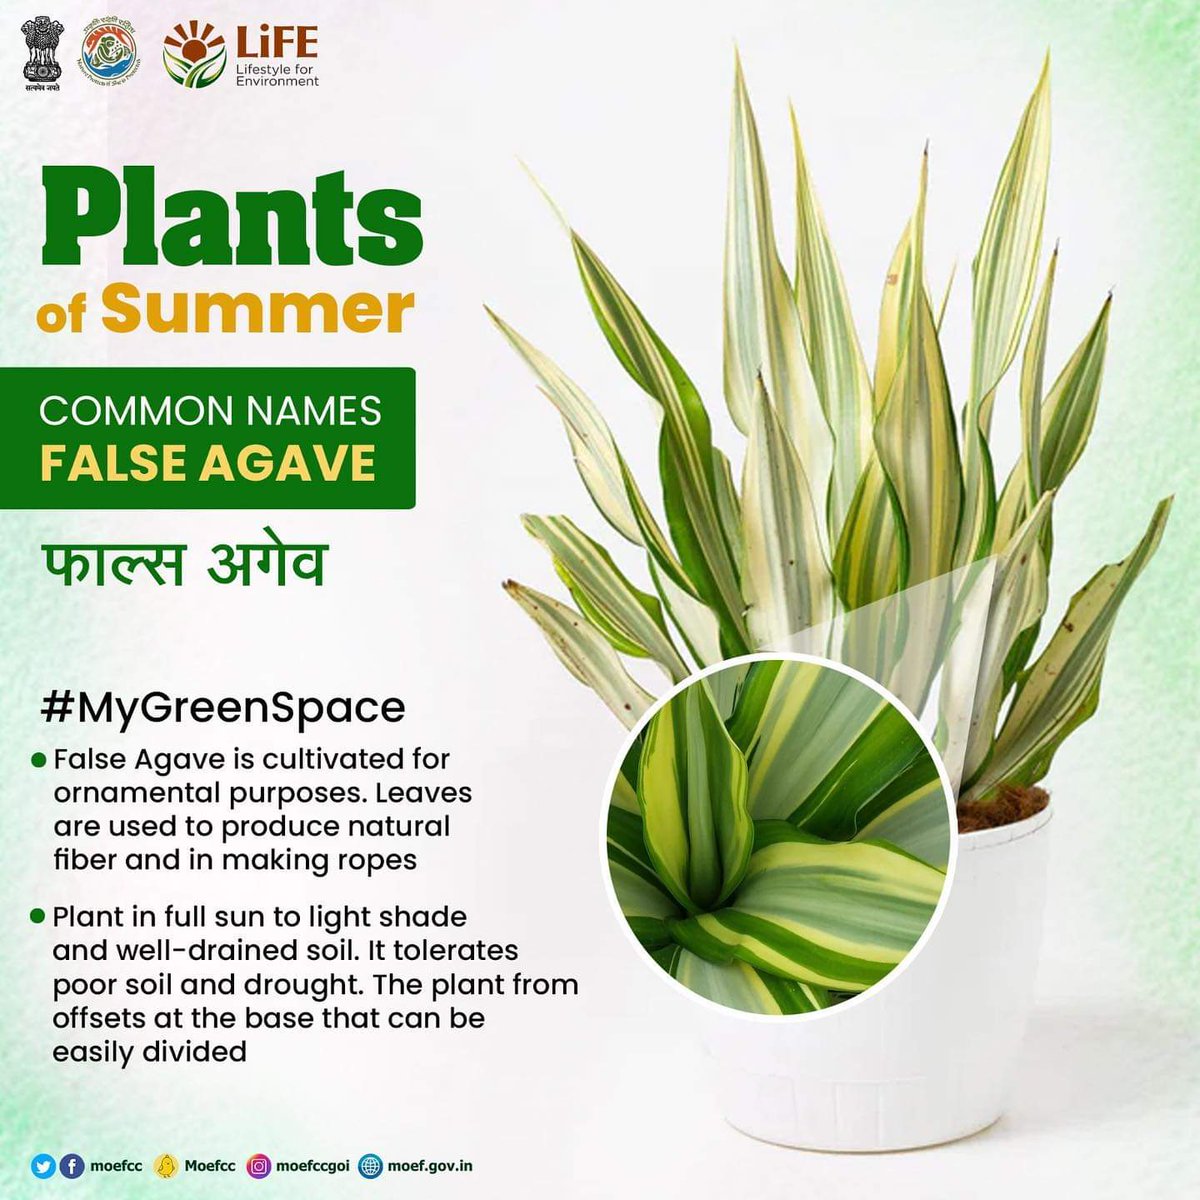 #MyGreenSpace #ChooseLiFE #MissionLiFE @moefcc 
Plants of Summer
COMMON NAMES FALSE AGAVE
फाल्स अगेव @NWRailways